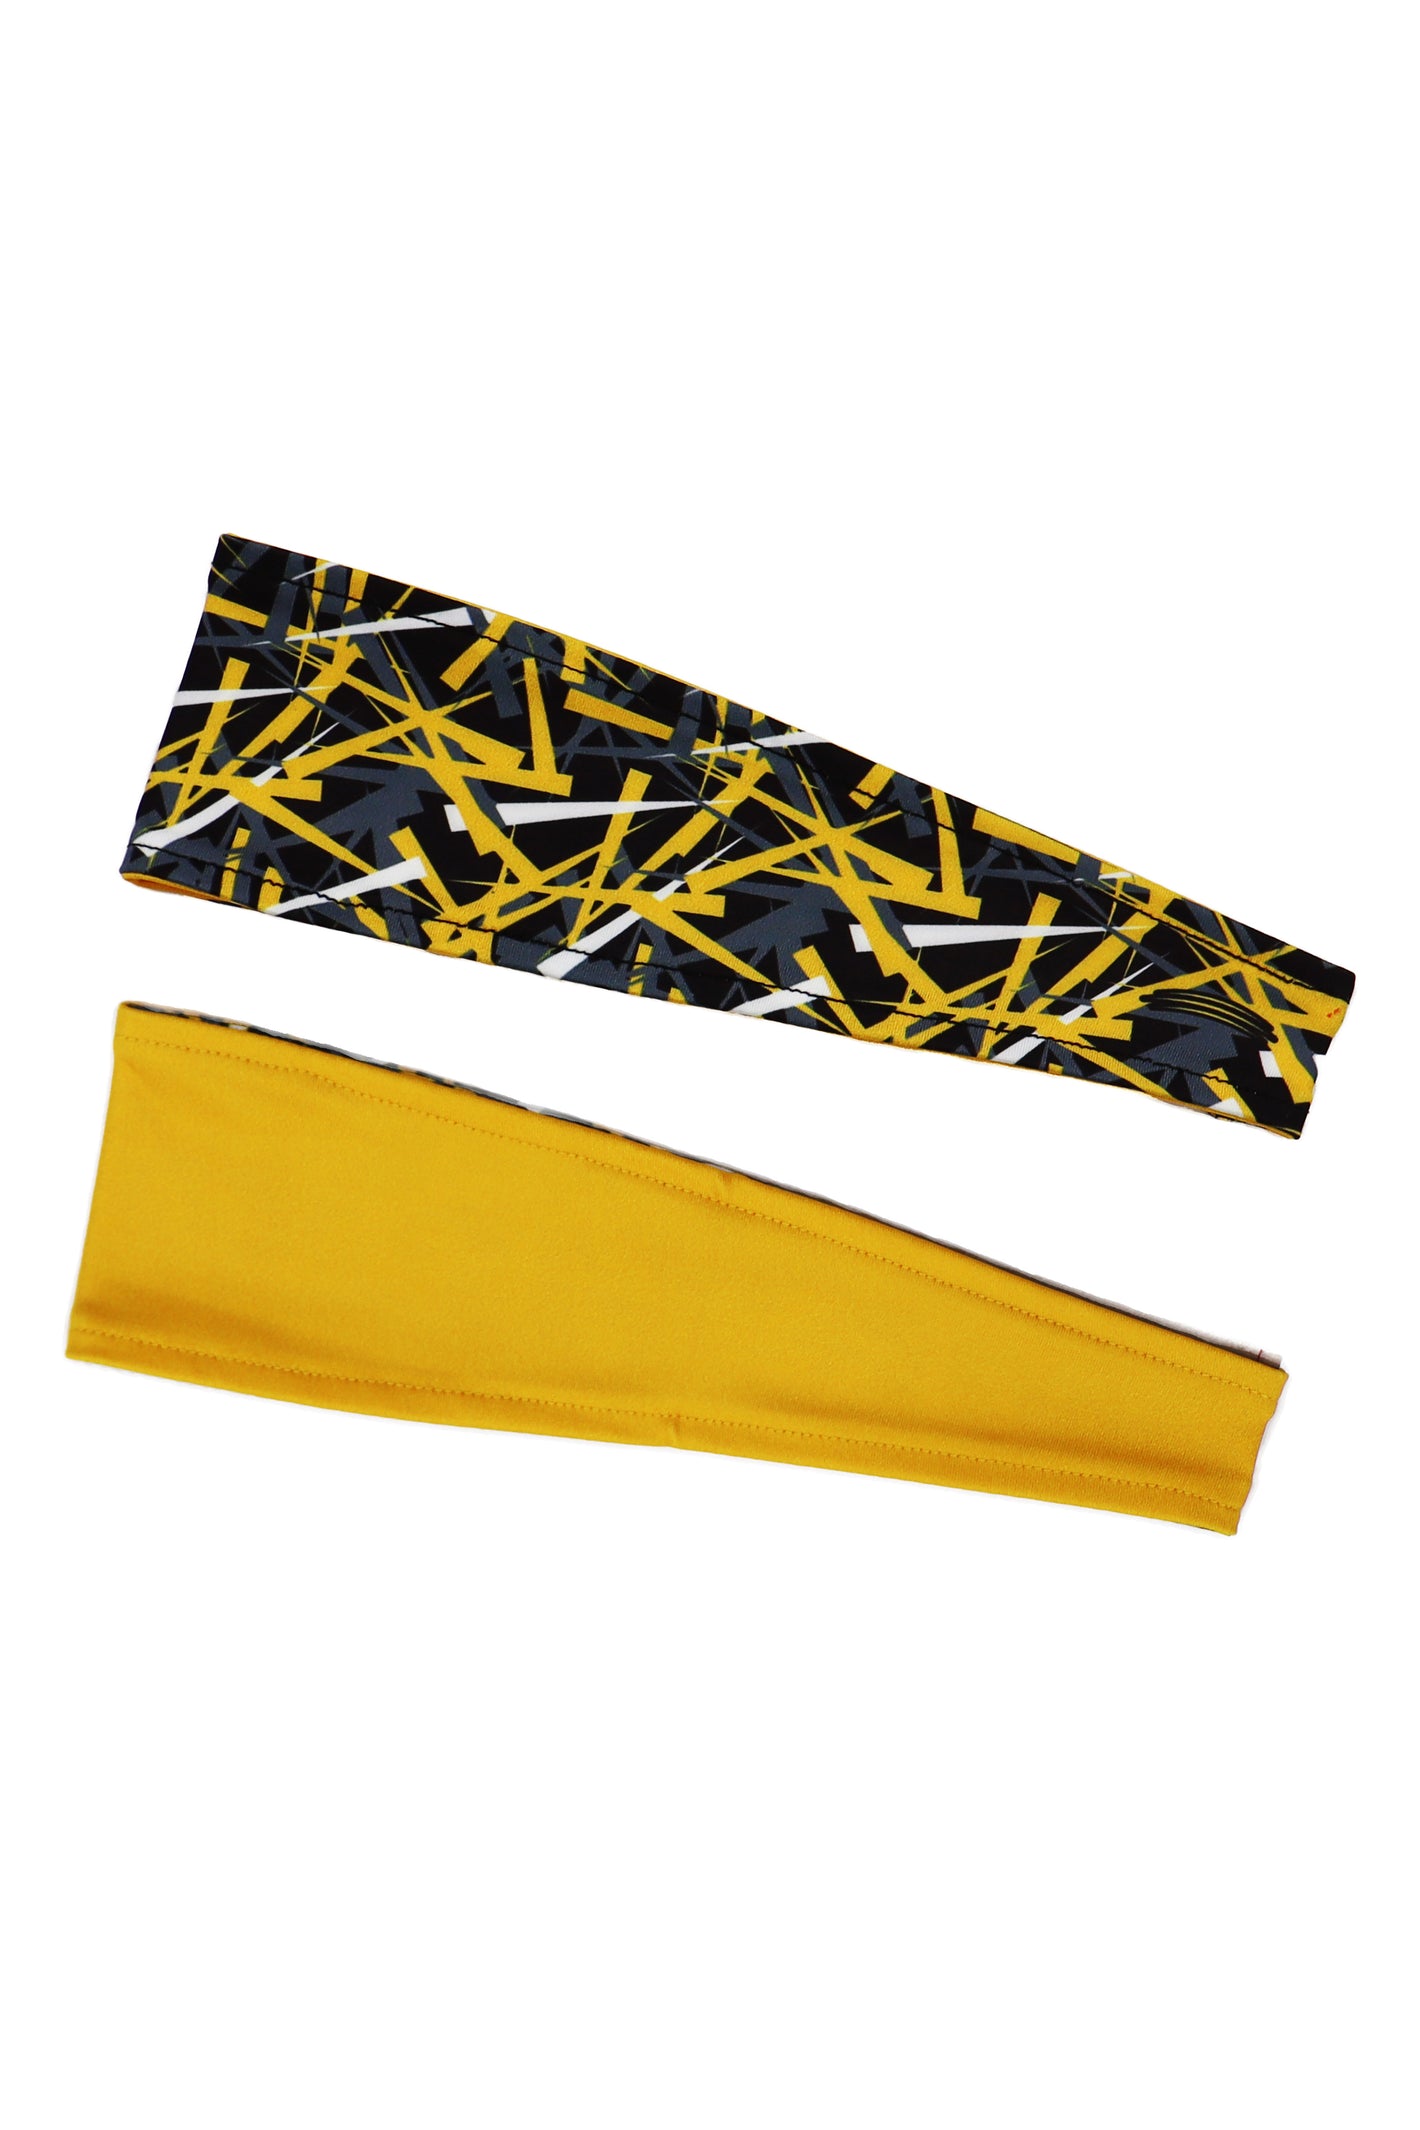 7109 - REVERSIBLE  Confetti Headband - Black & Gold Print